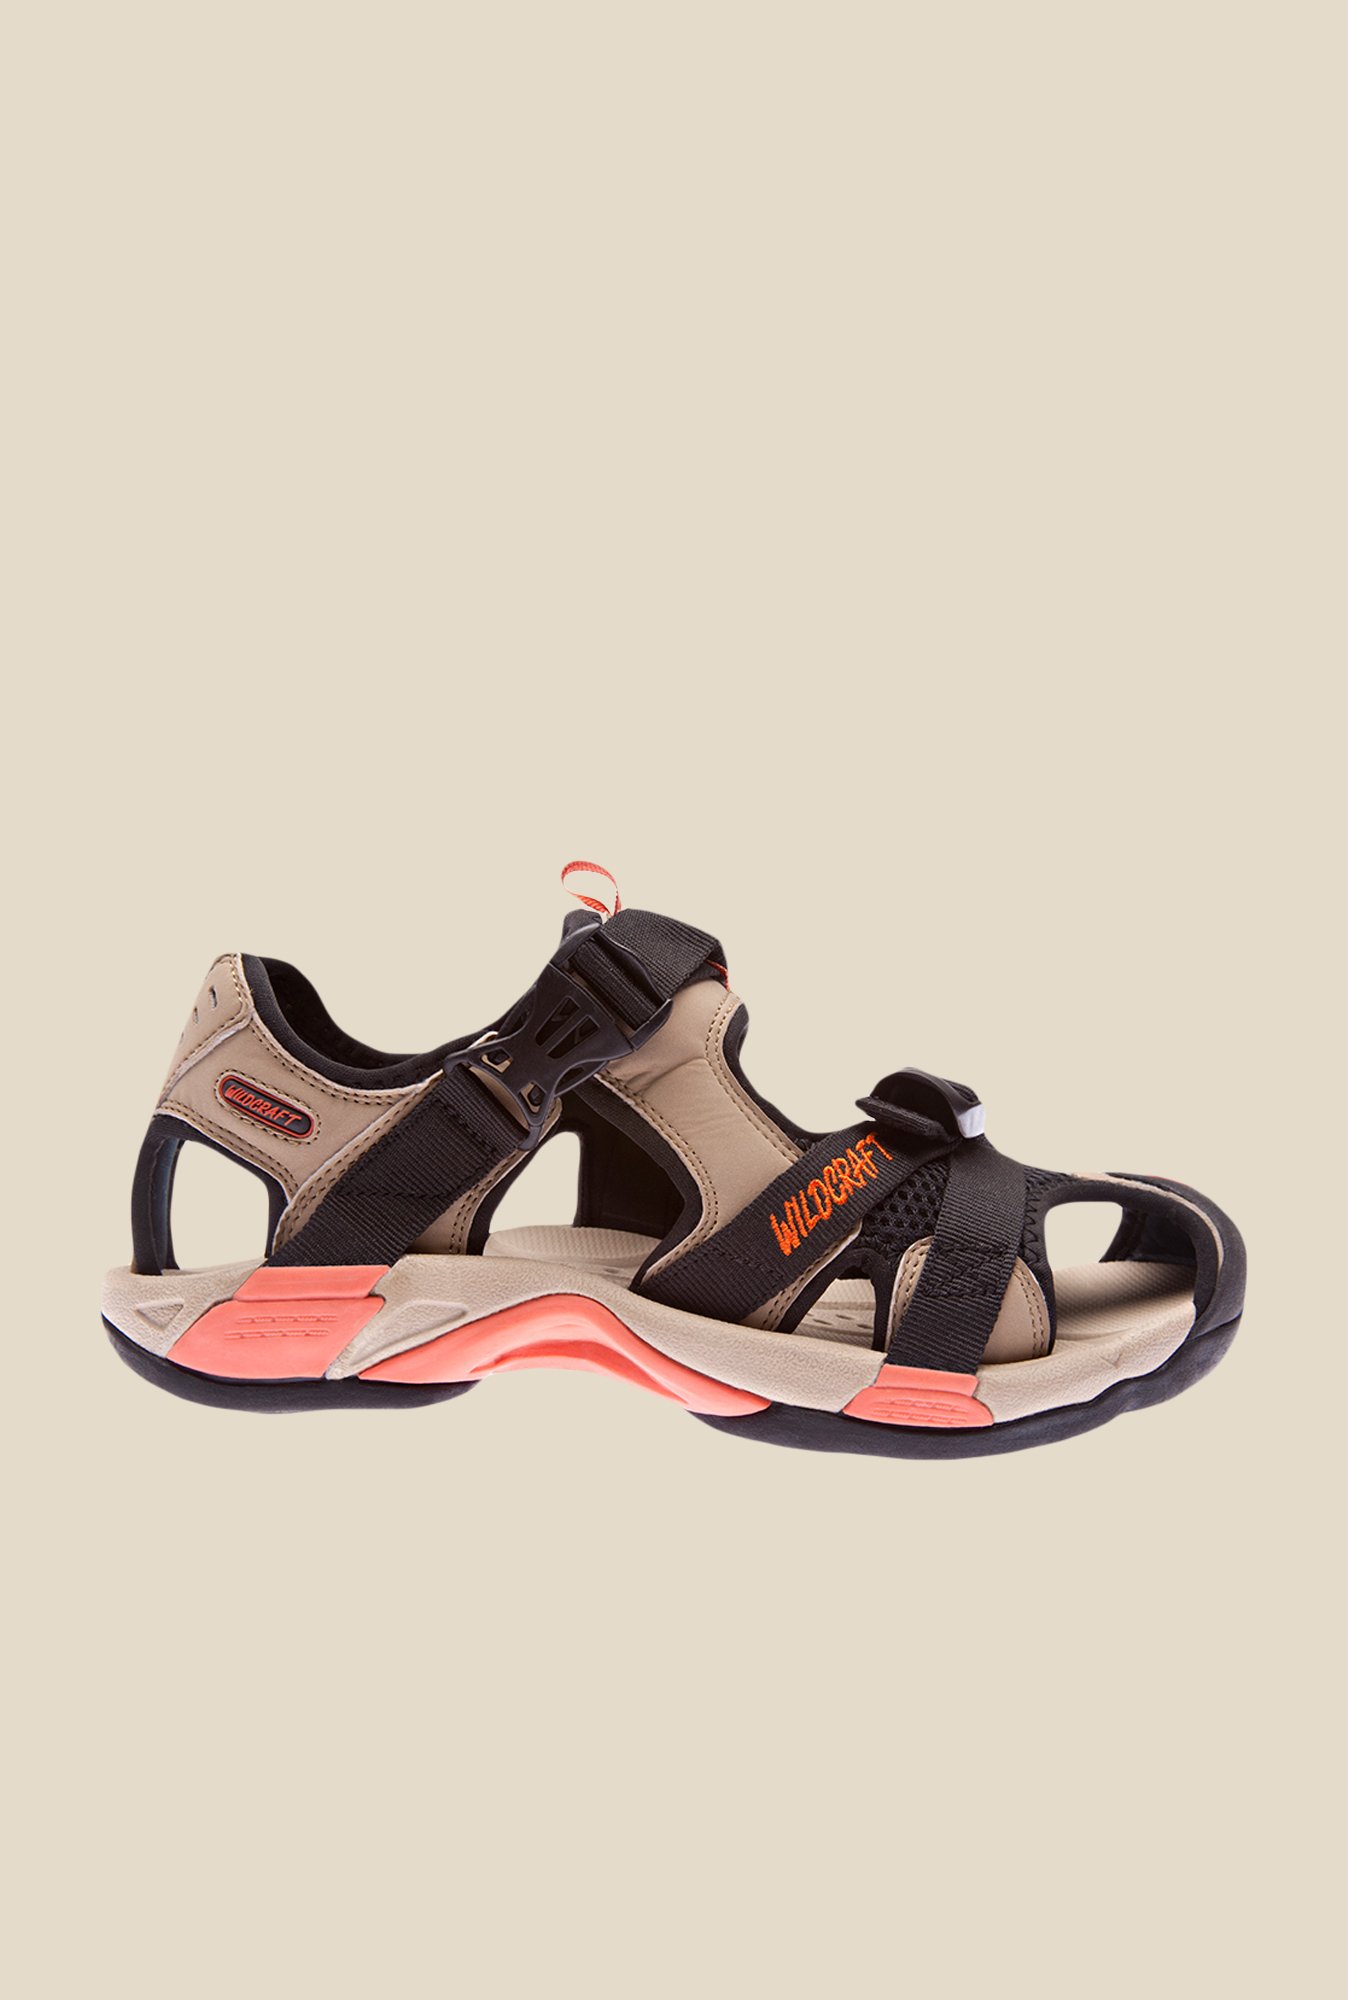 Wildcraft Sandals : Buy Wildcraft Men Vesta Black Floater Sandals Online |  Nykaa Fashion